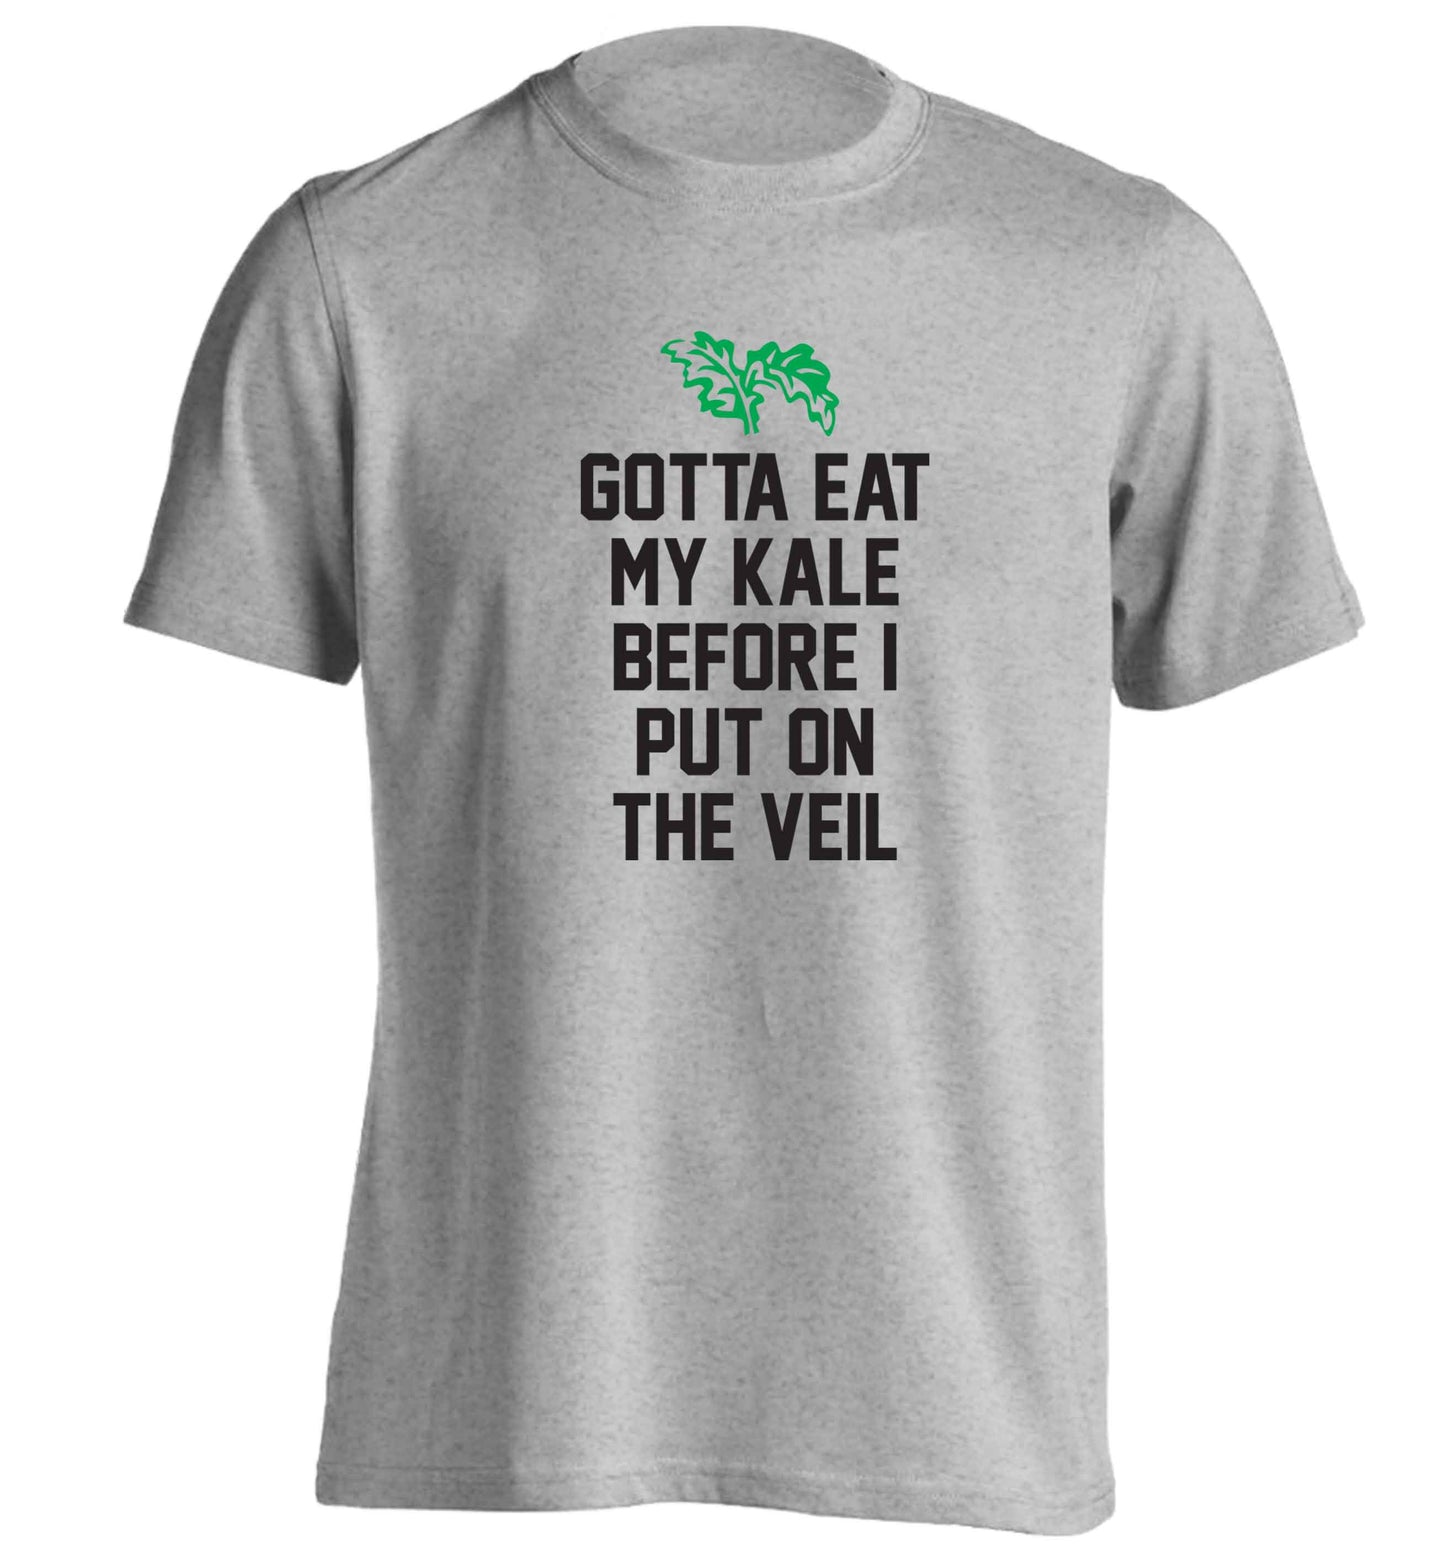 Gotta eat my kale before I put on the veil adults unisex grey Tshirt 2XL